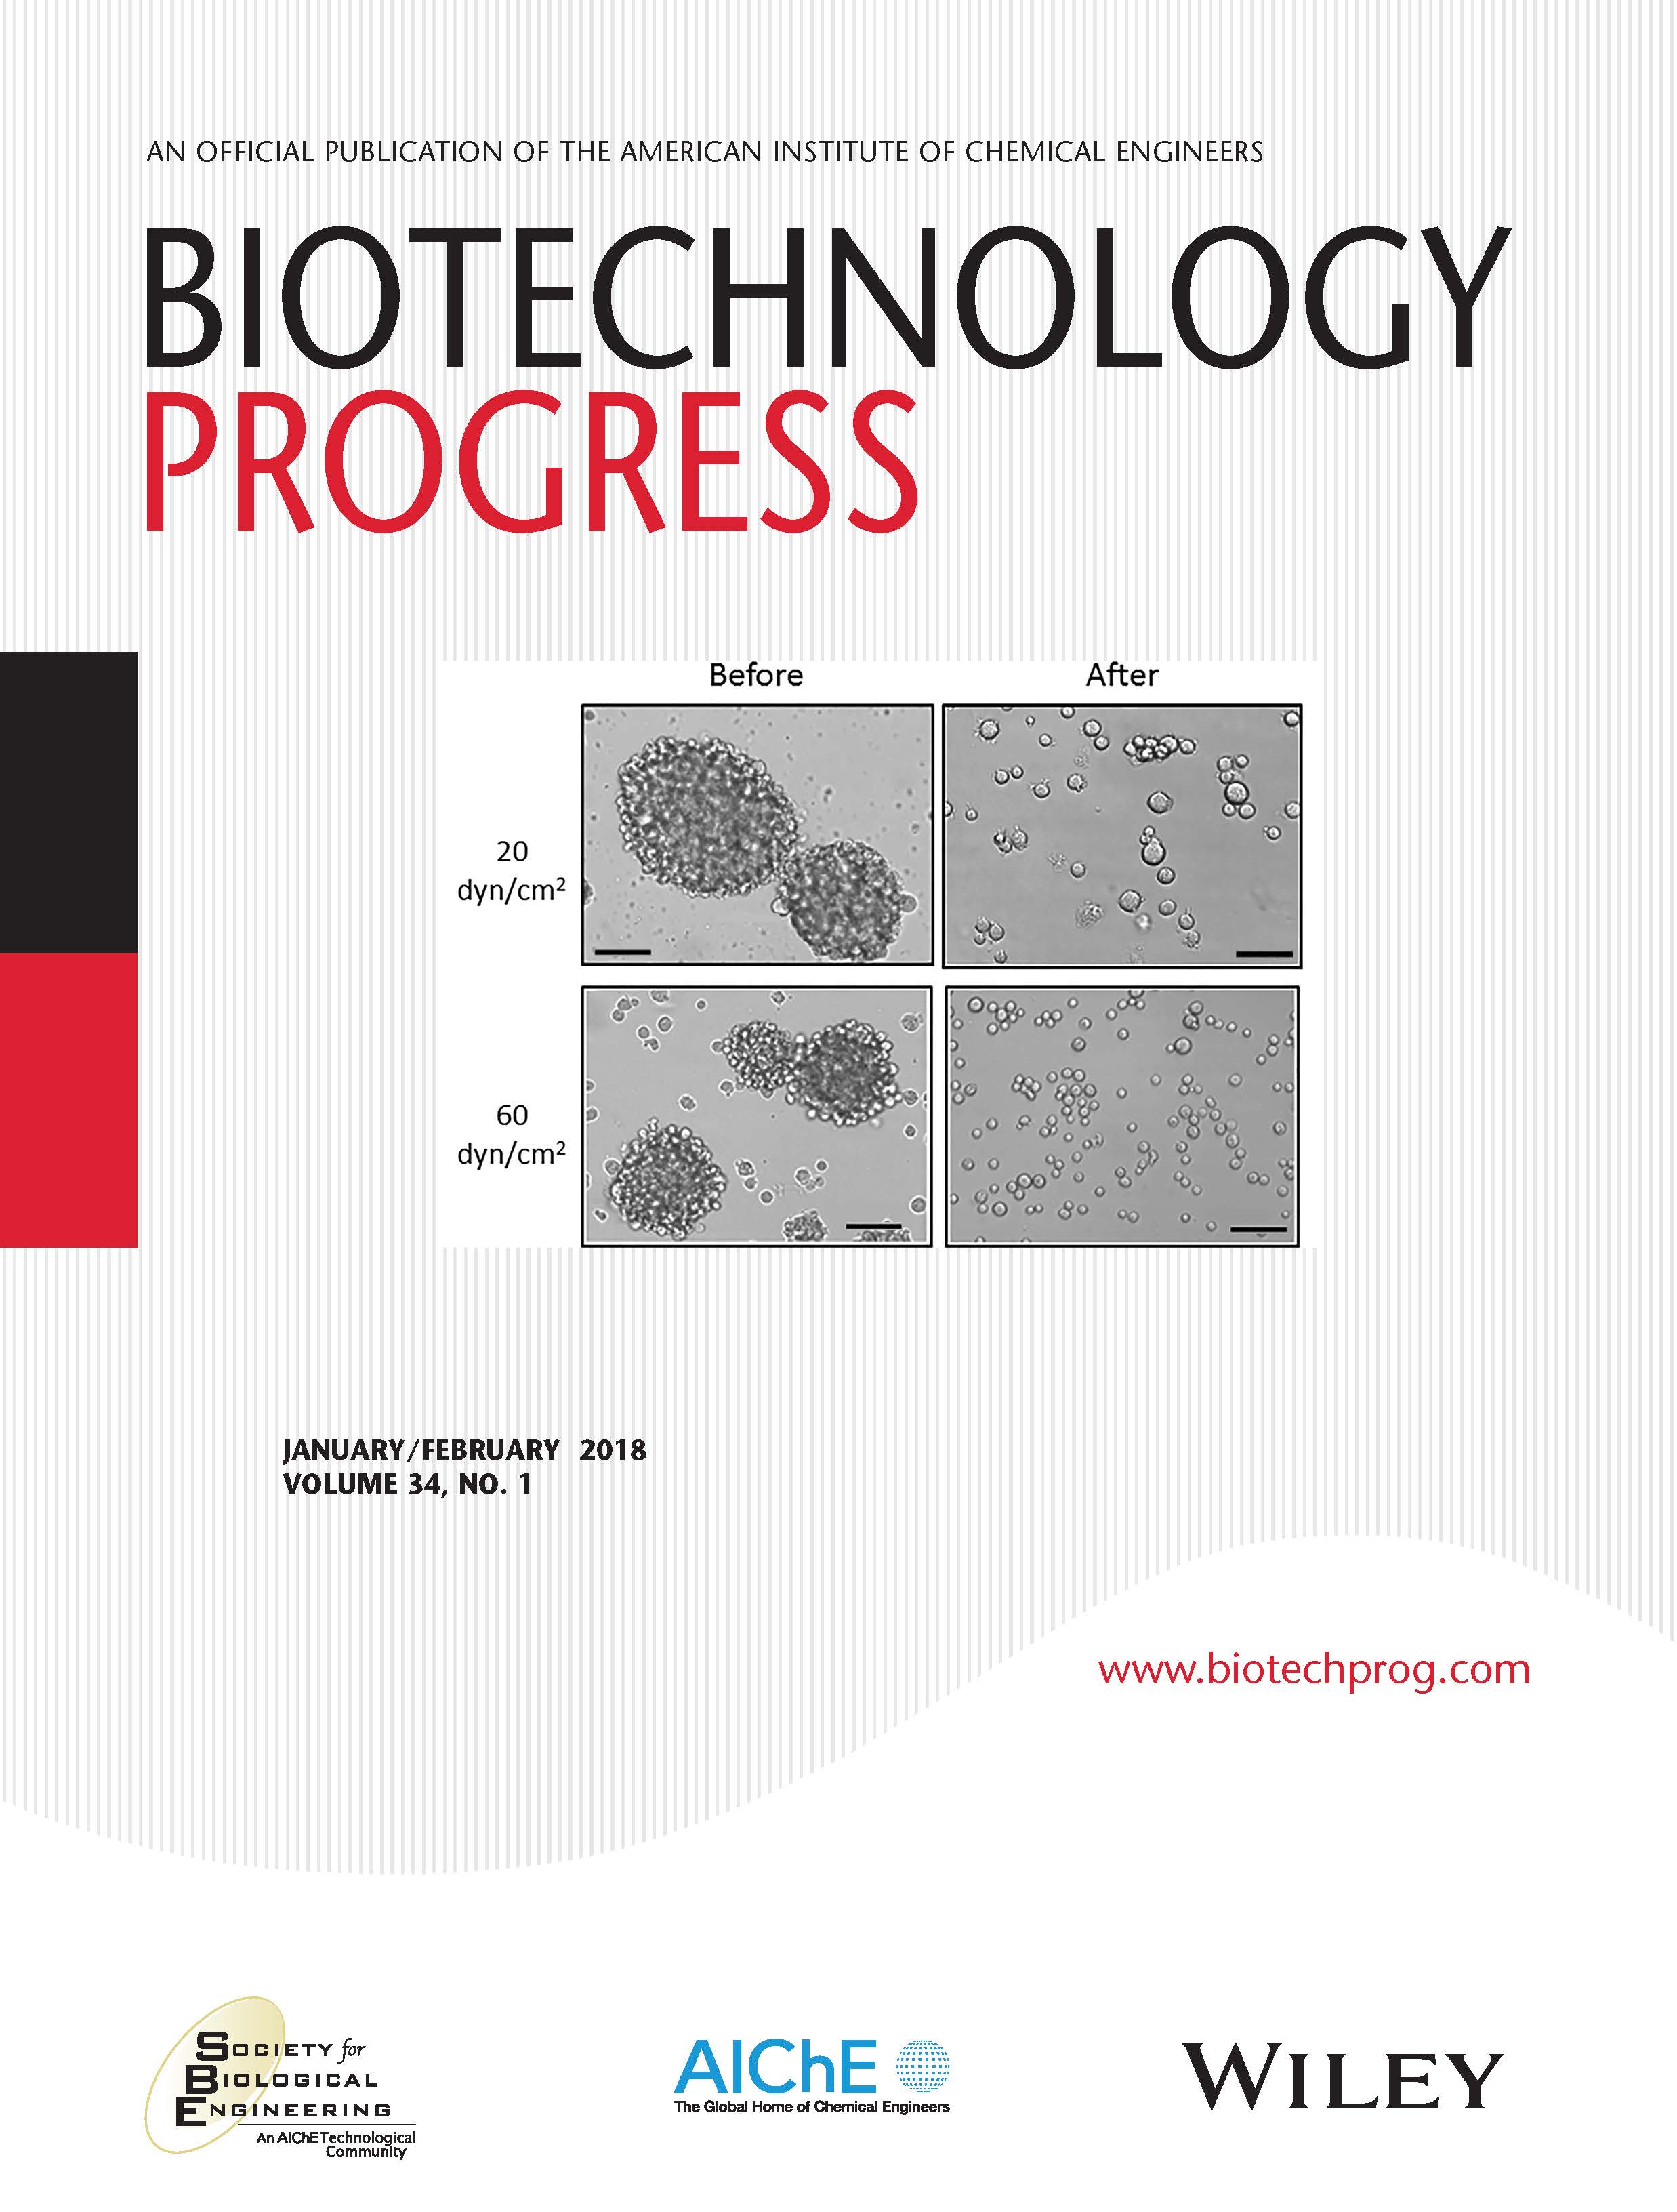  Biotechnology Progress journal cover photo for January/February 2018